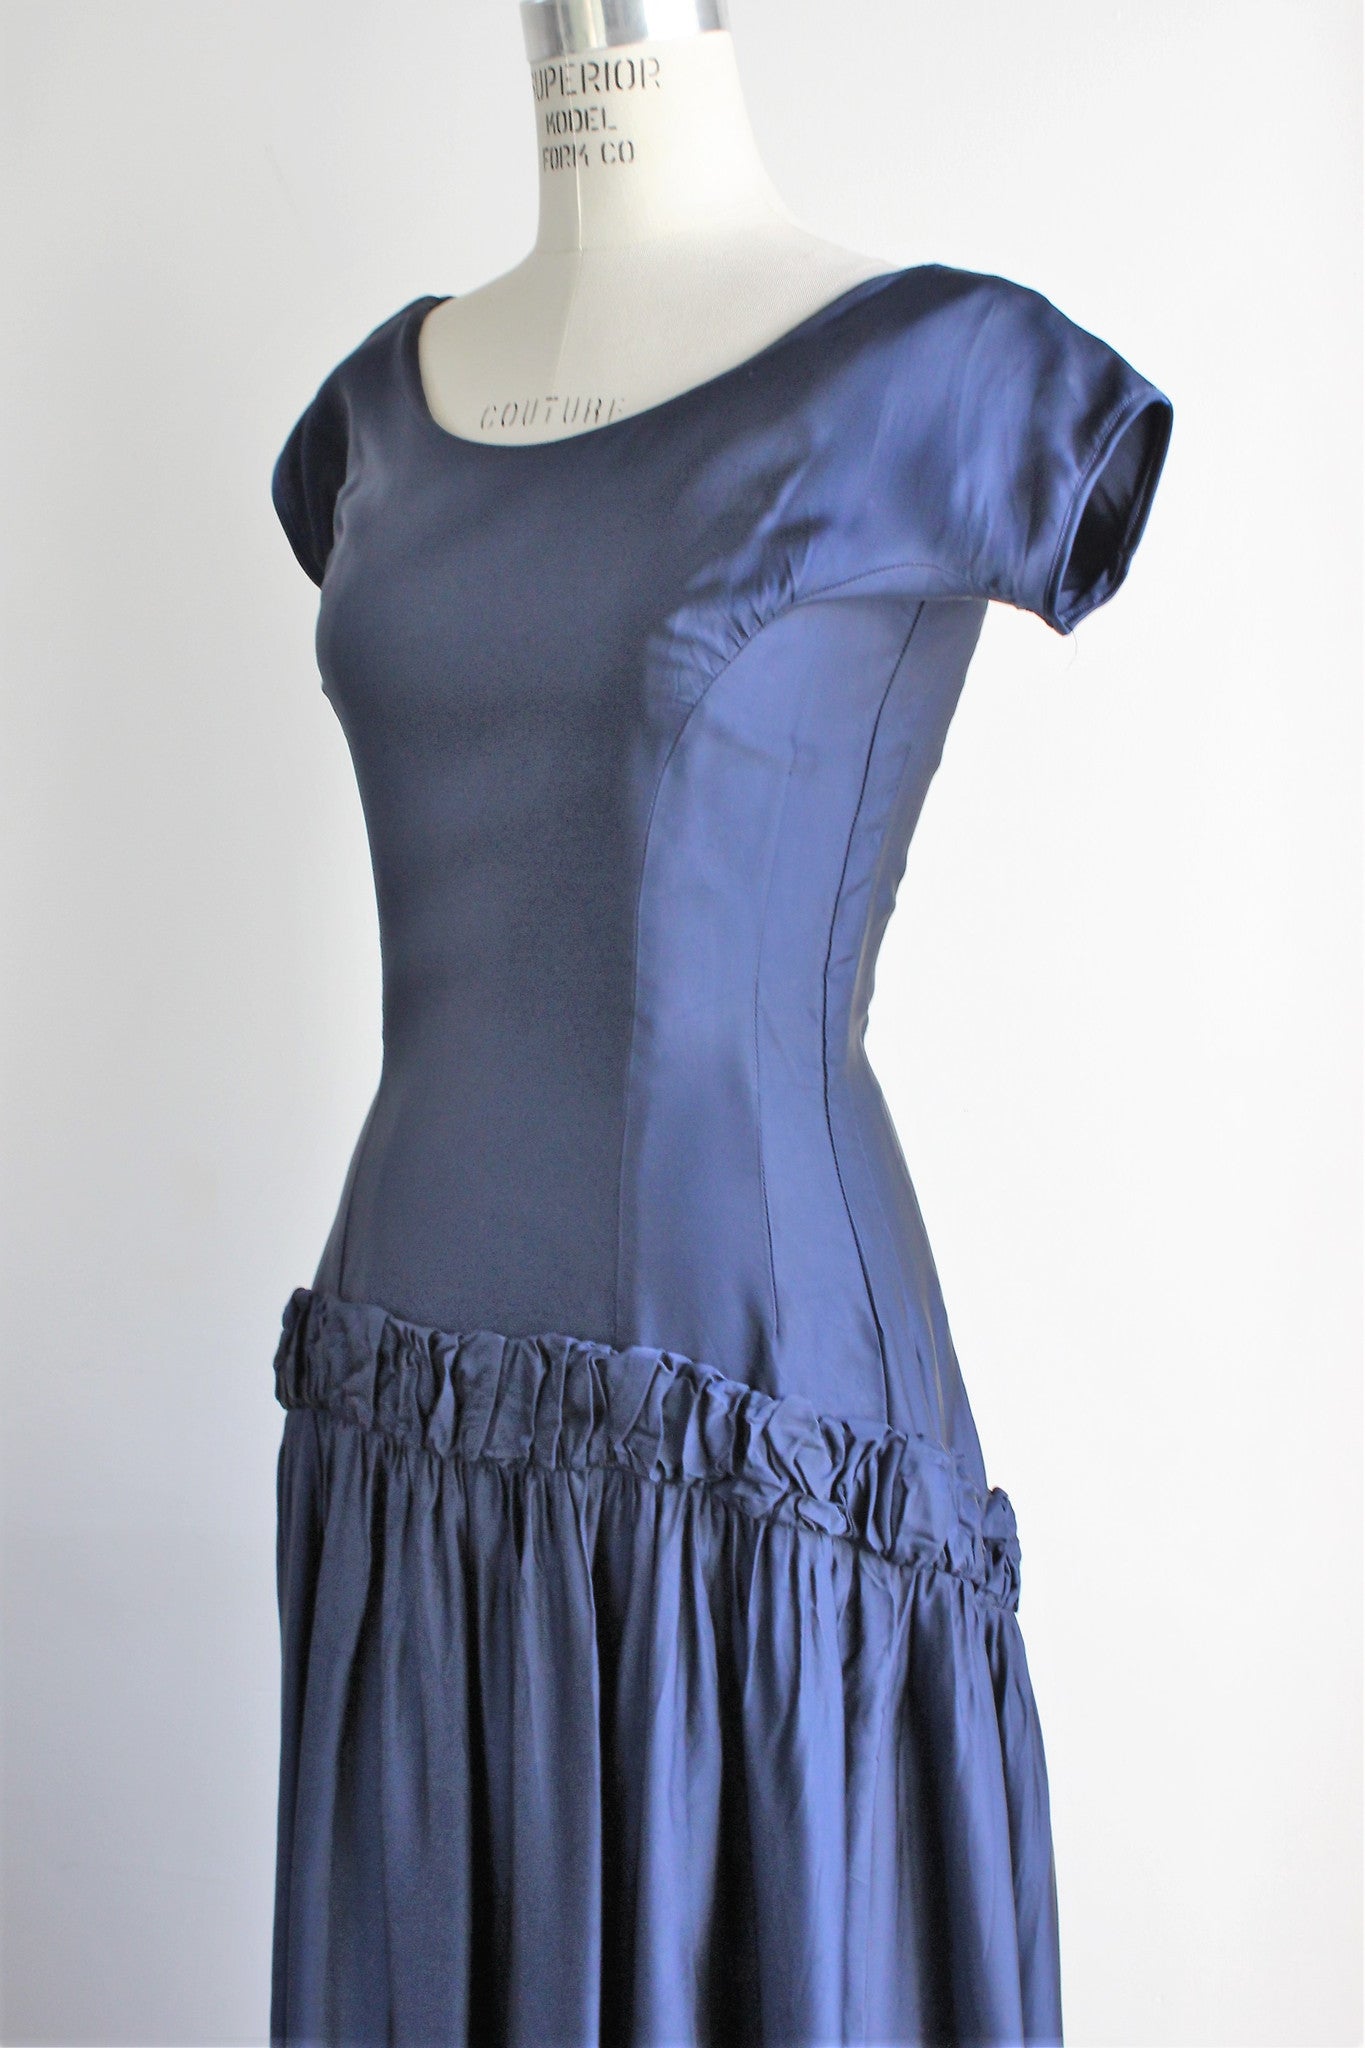 Vintage 1950s Navy Blue Party Dress / New Look Satin